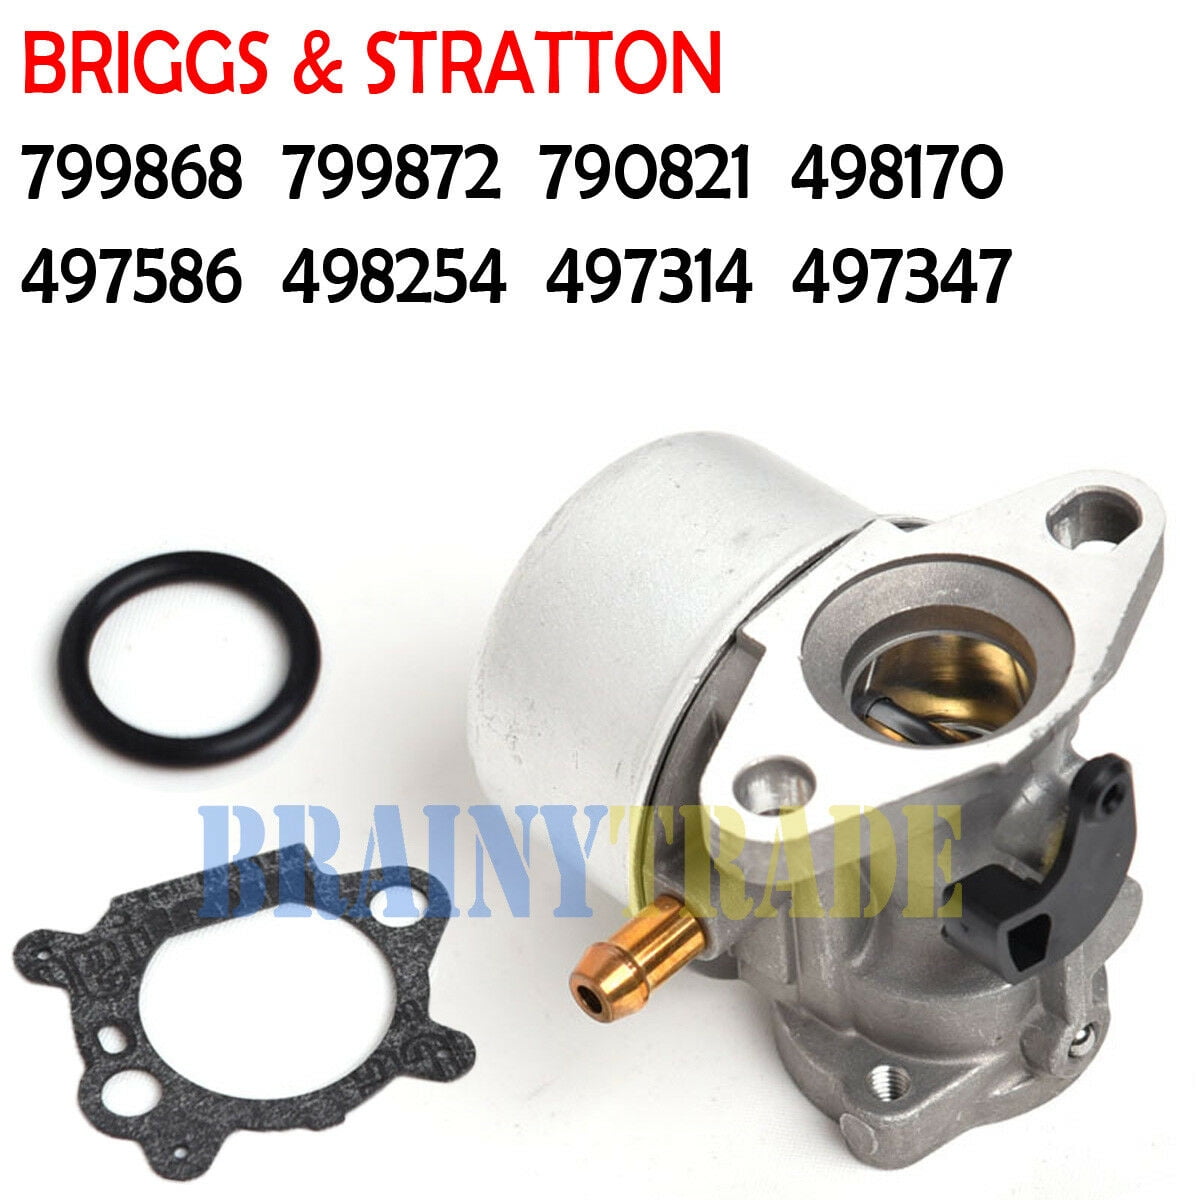 Replacement for Carburetor Briggs & Stratton 799871 799866 790845 796707 794304 